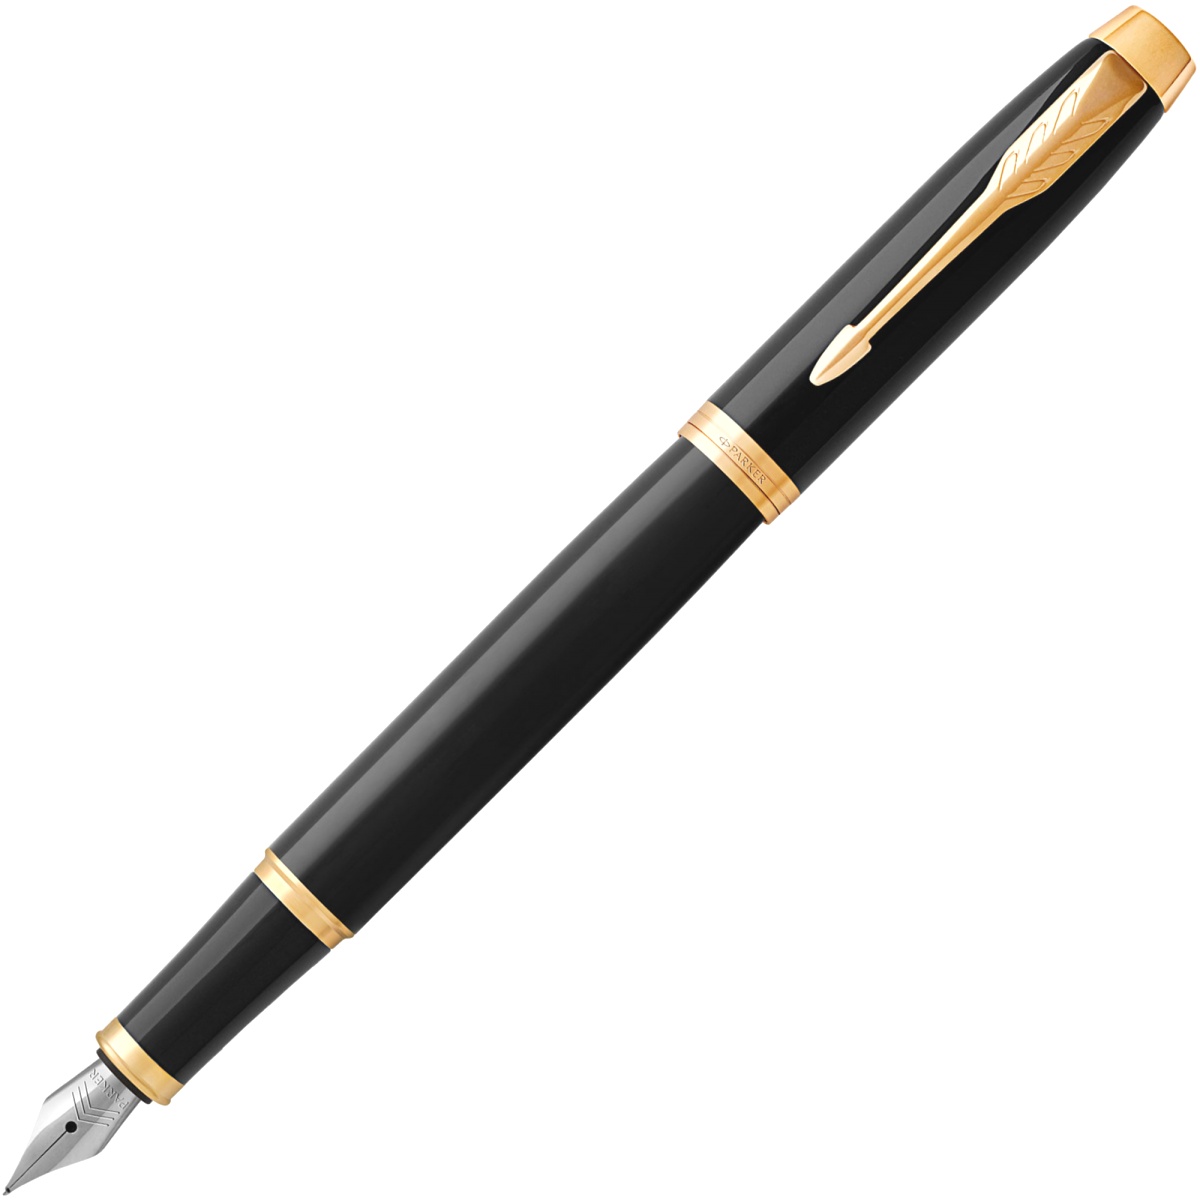  Набор Parker 2020: ручка перьевая Parker IM Core F321, Black GT (Перо M) + чехол для ручки, фото 4